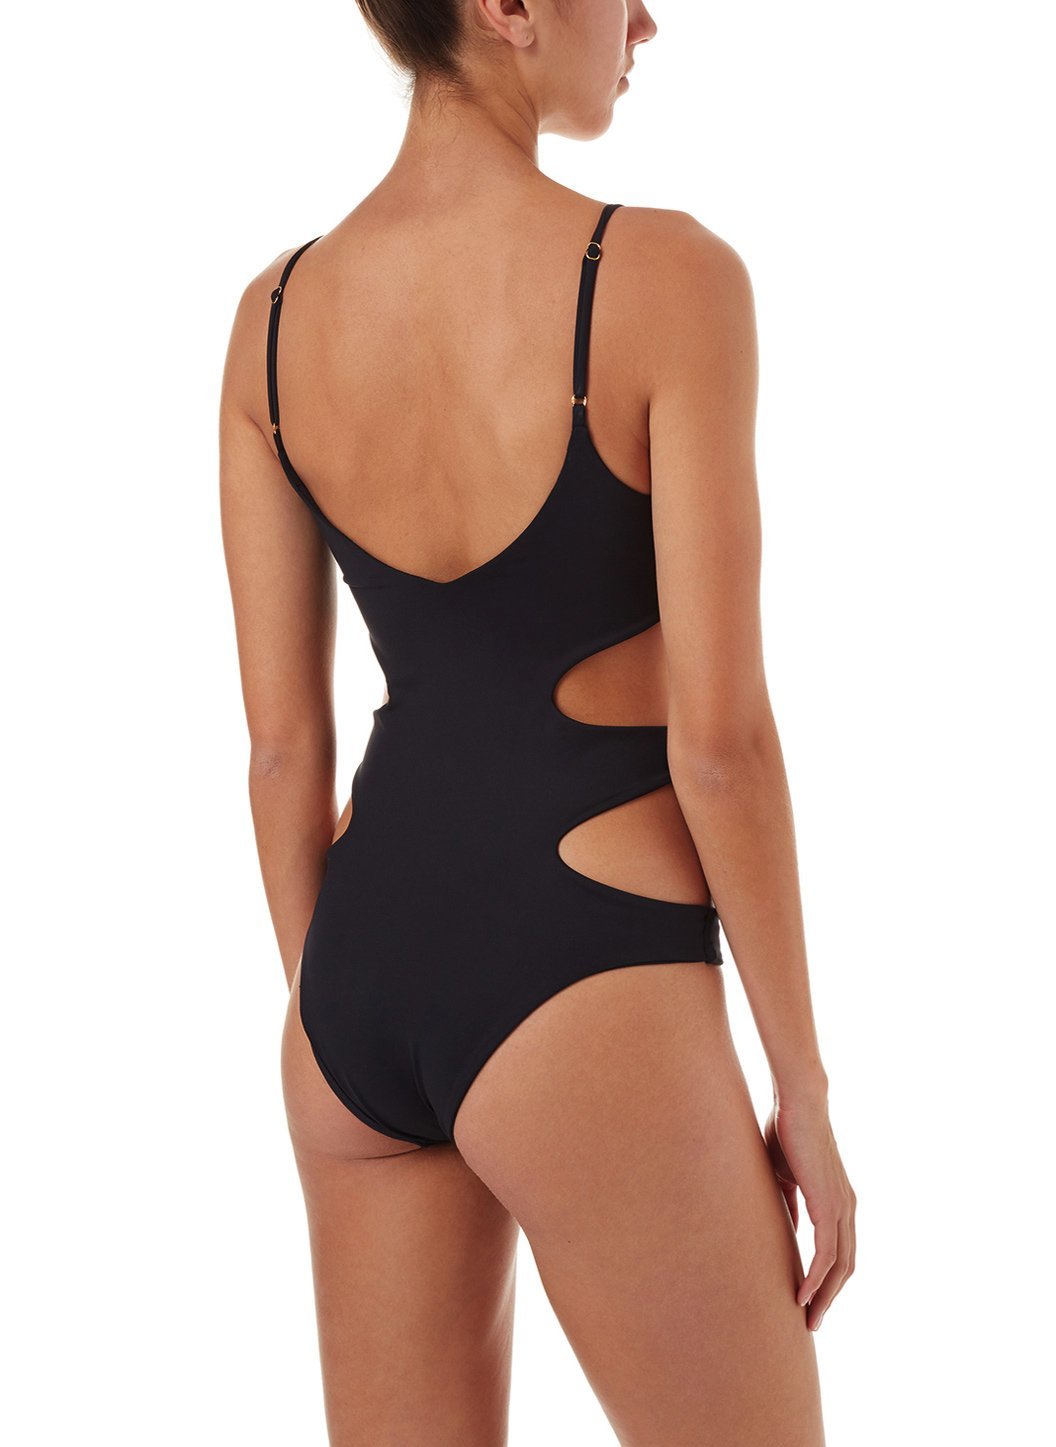 santorini black overtheshoulder cutout onepiece swimsuit 2019 B